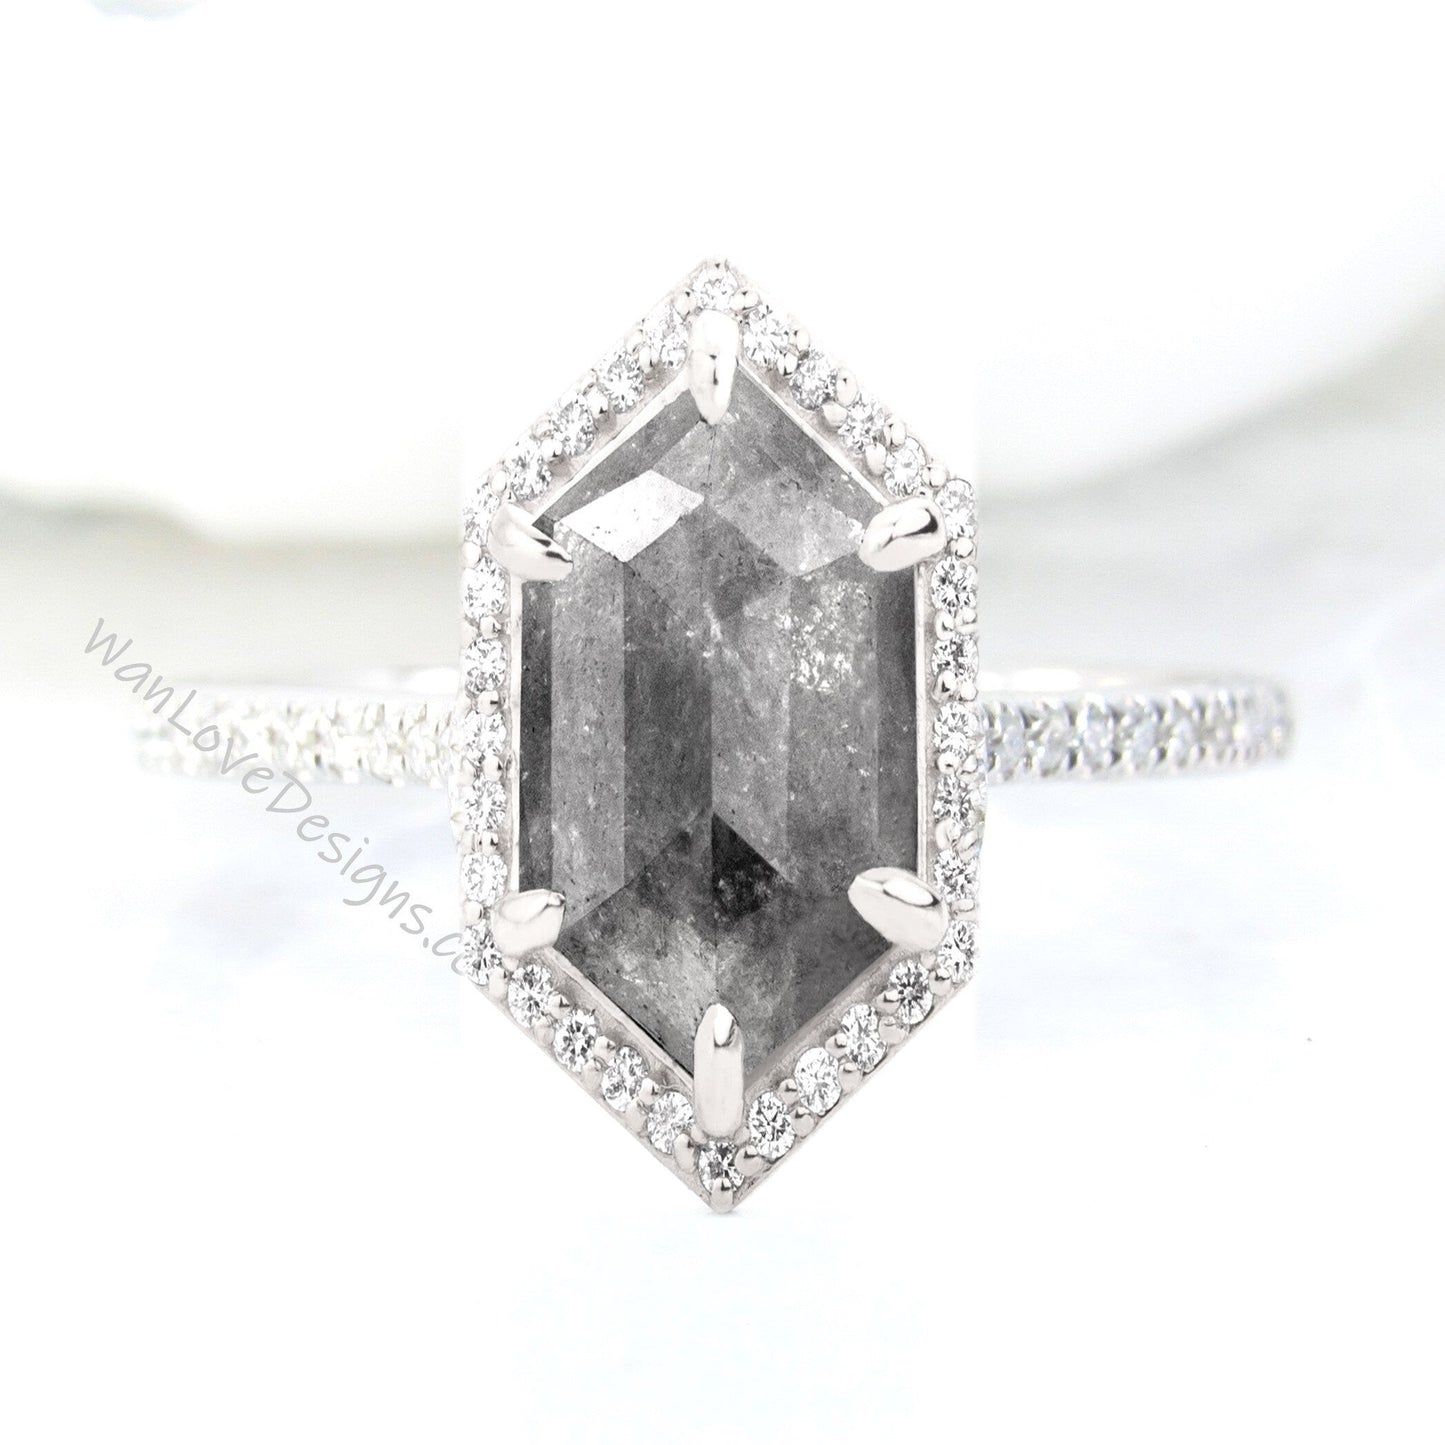 Elongated Hexagon Salt & Pepper Diamond Halo Engagement Ring Custom Wedding Anniversary Gift 14kt 18kt Gold, Platinum, WanLoveDesigns Wan Love Designs